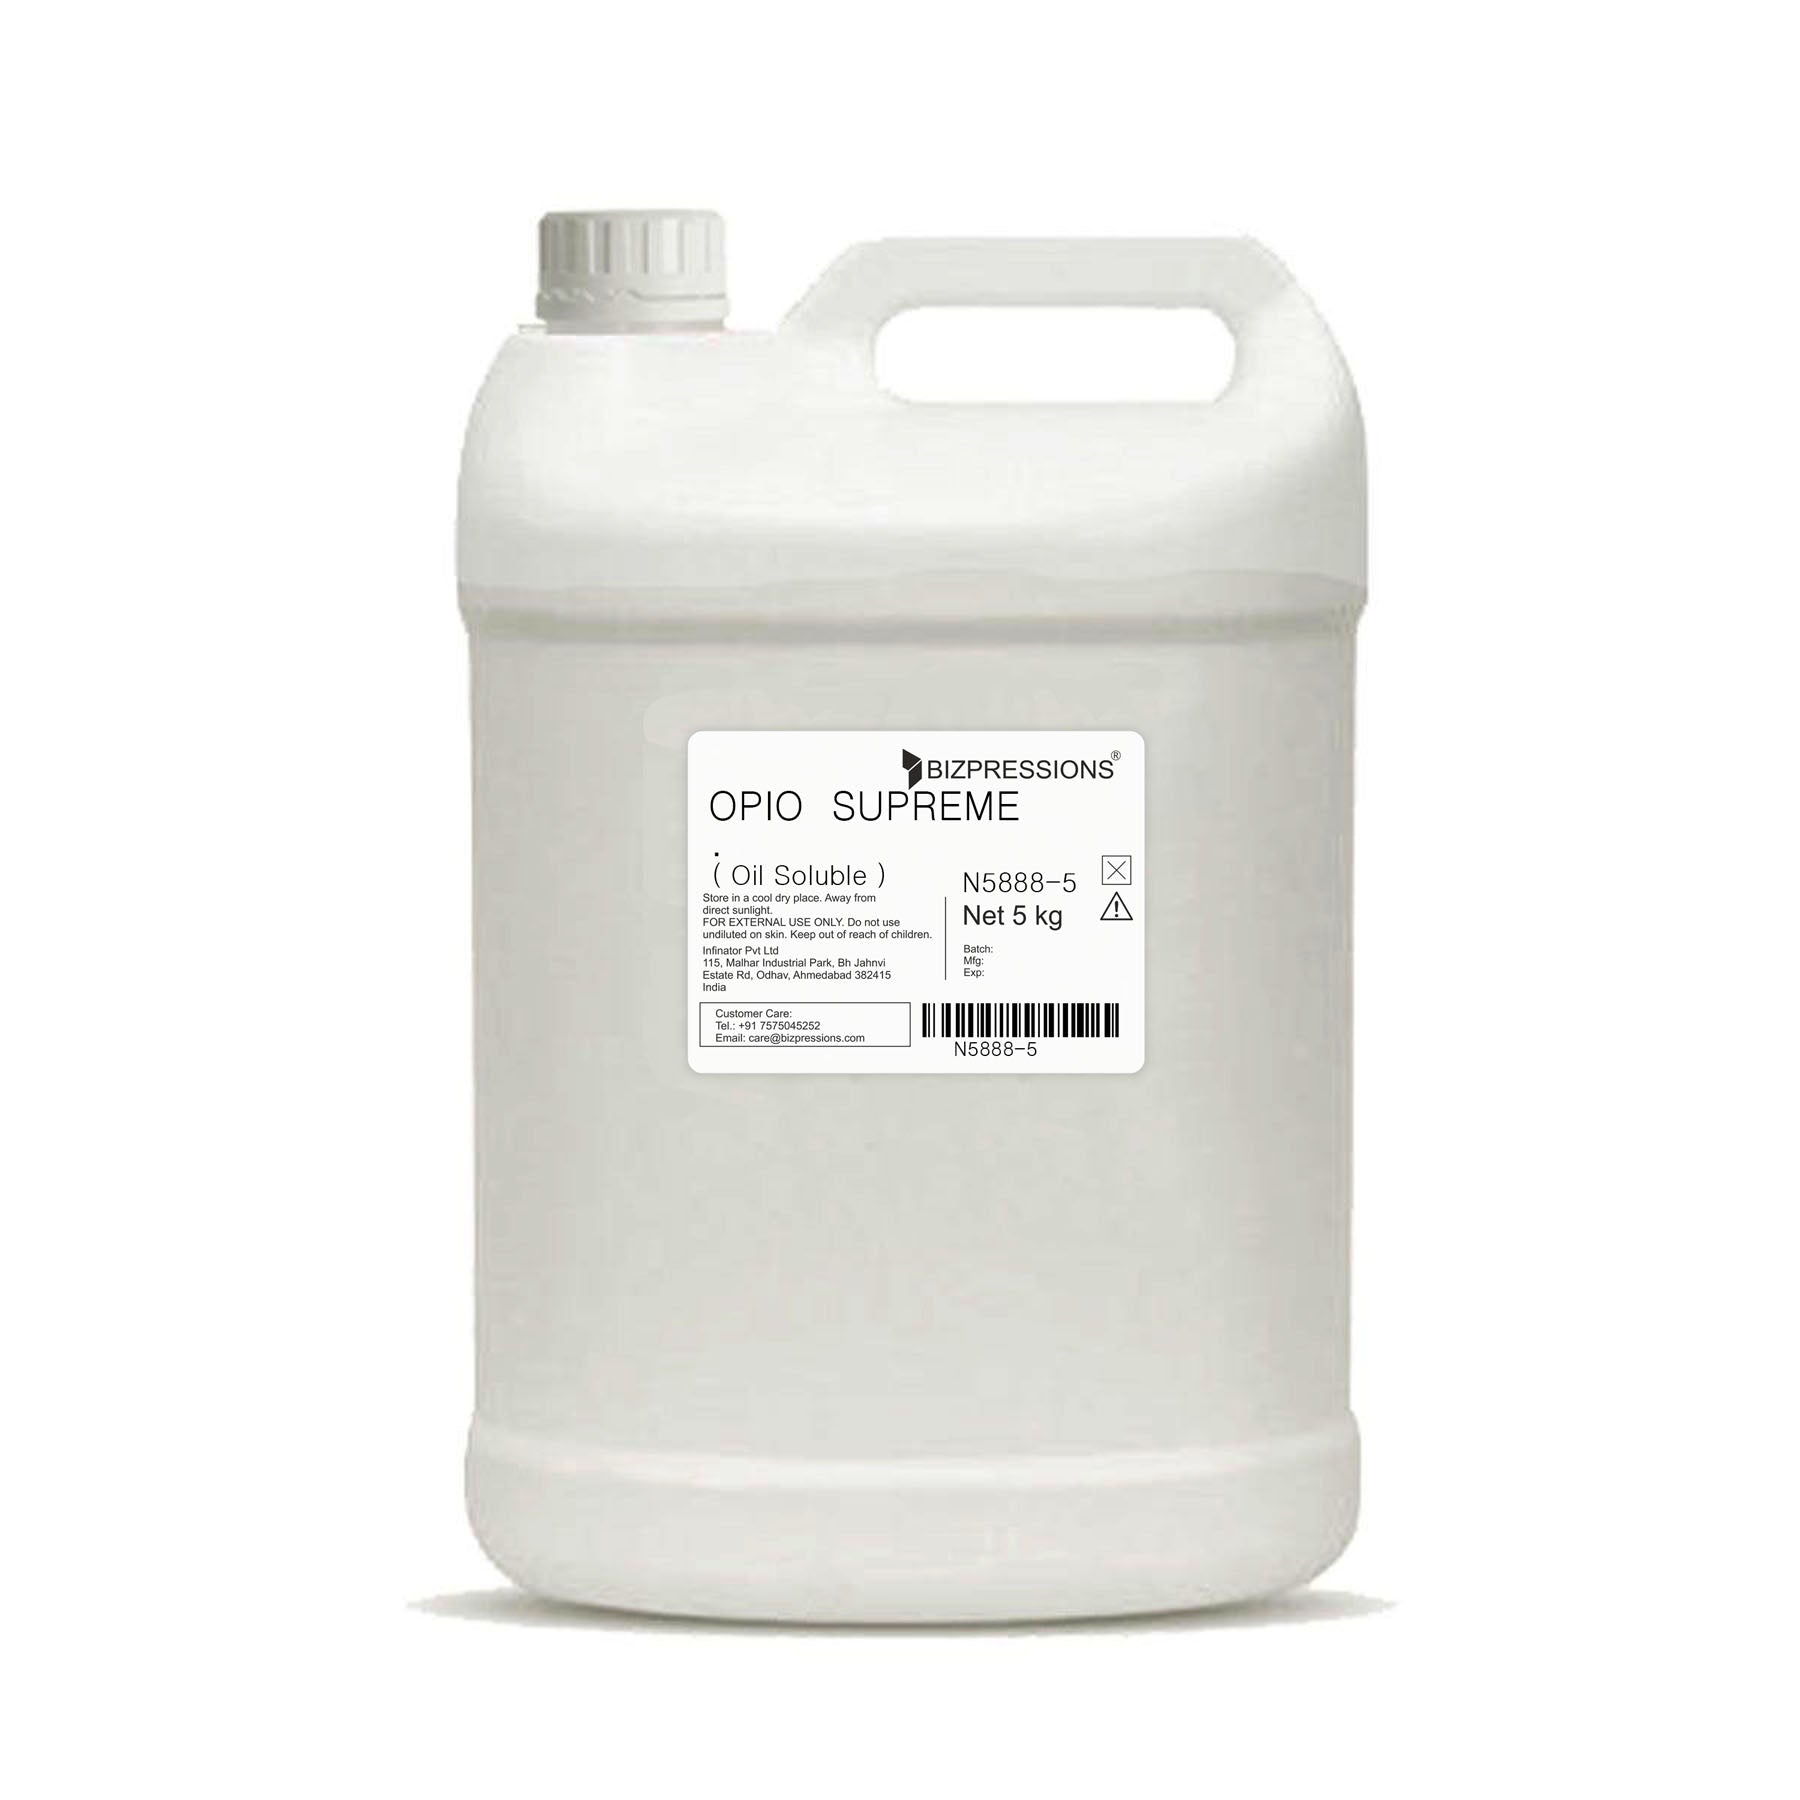 OPIO SUPREME - Fragrance ( Oil Soluble ) - 5 kg